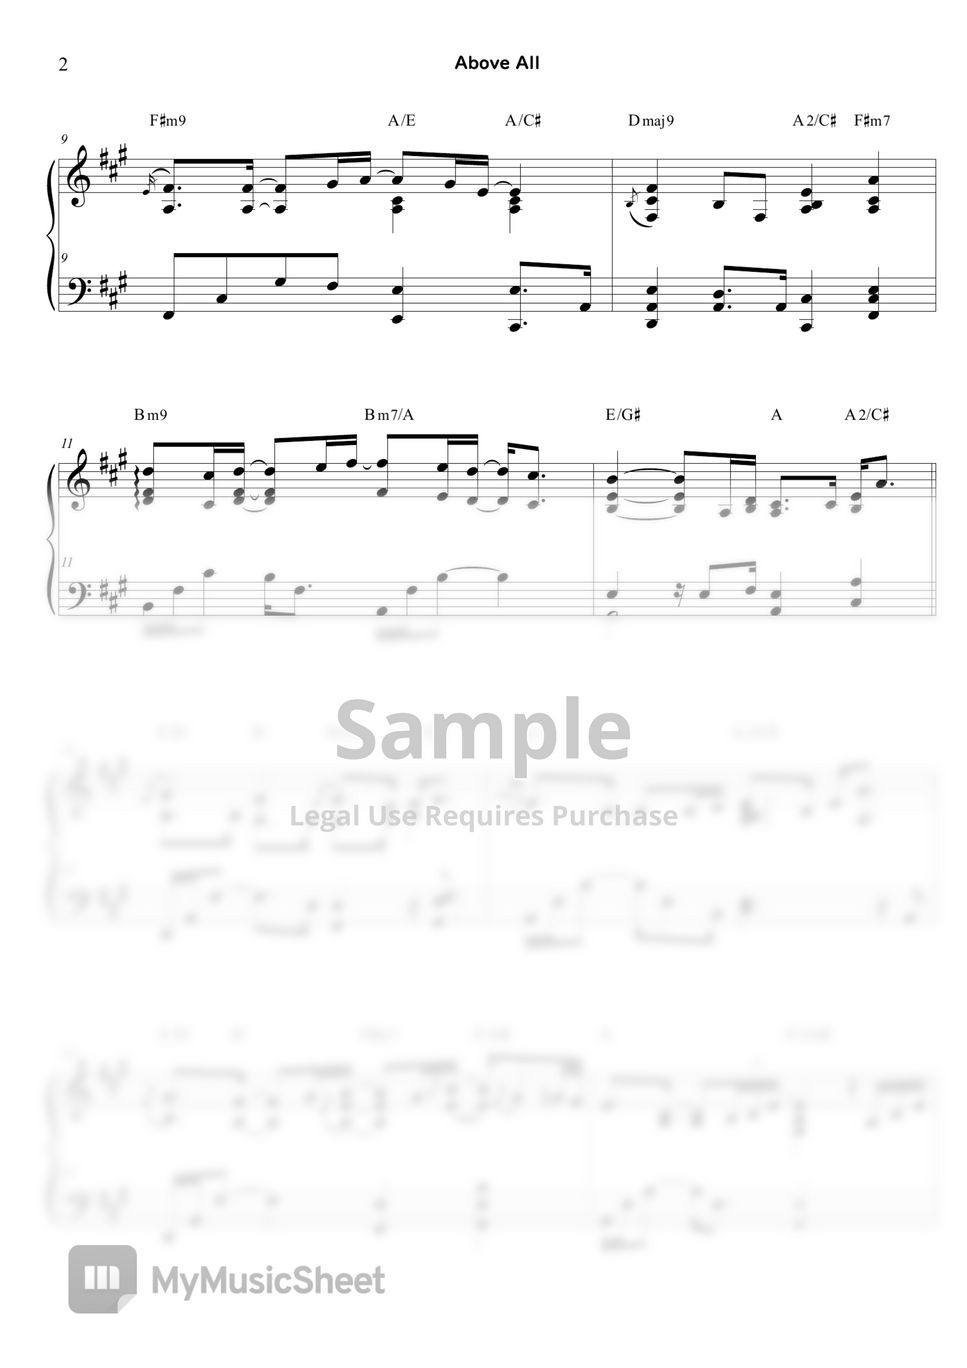 Leblanc / Baloche - Above All-Full Score (Performance) by YohanKim